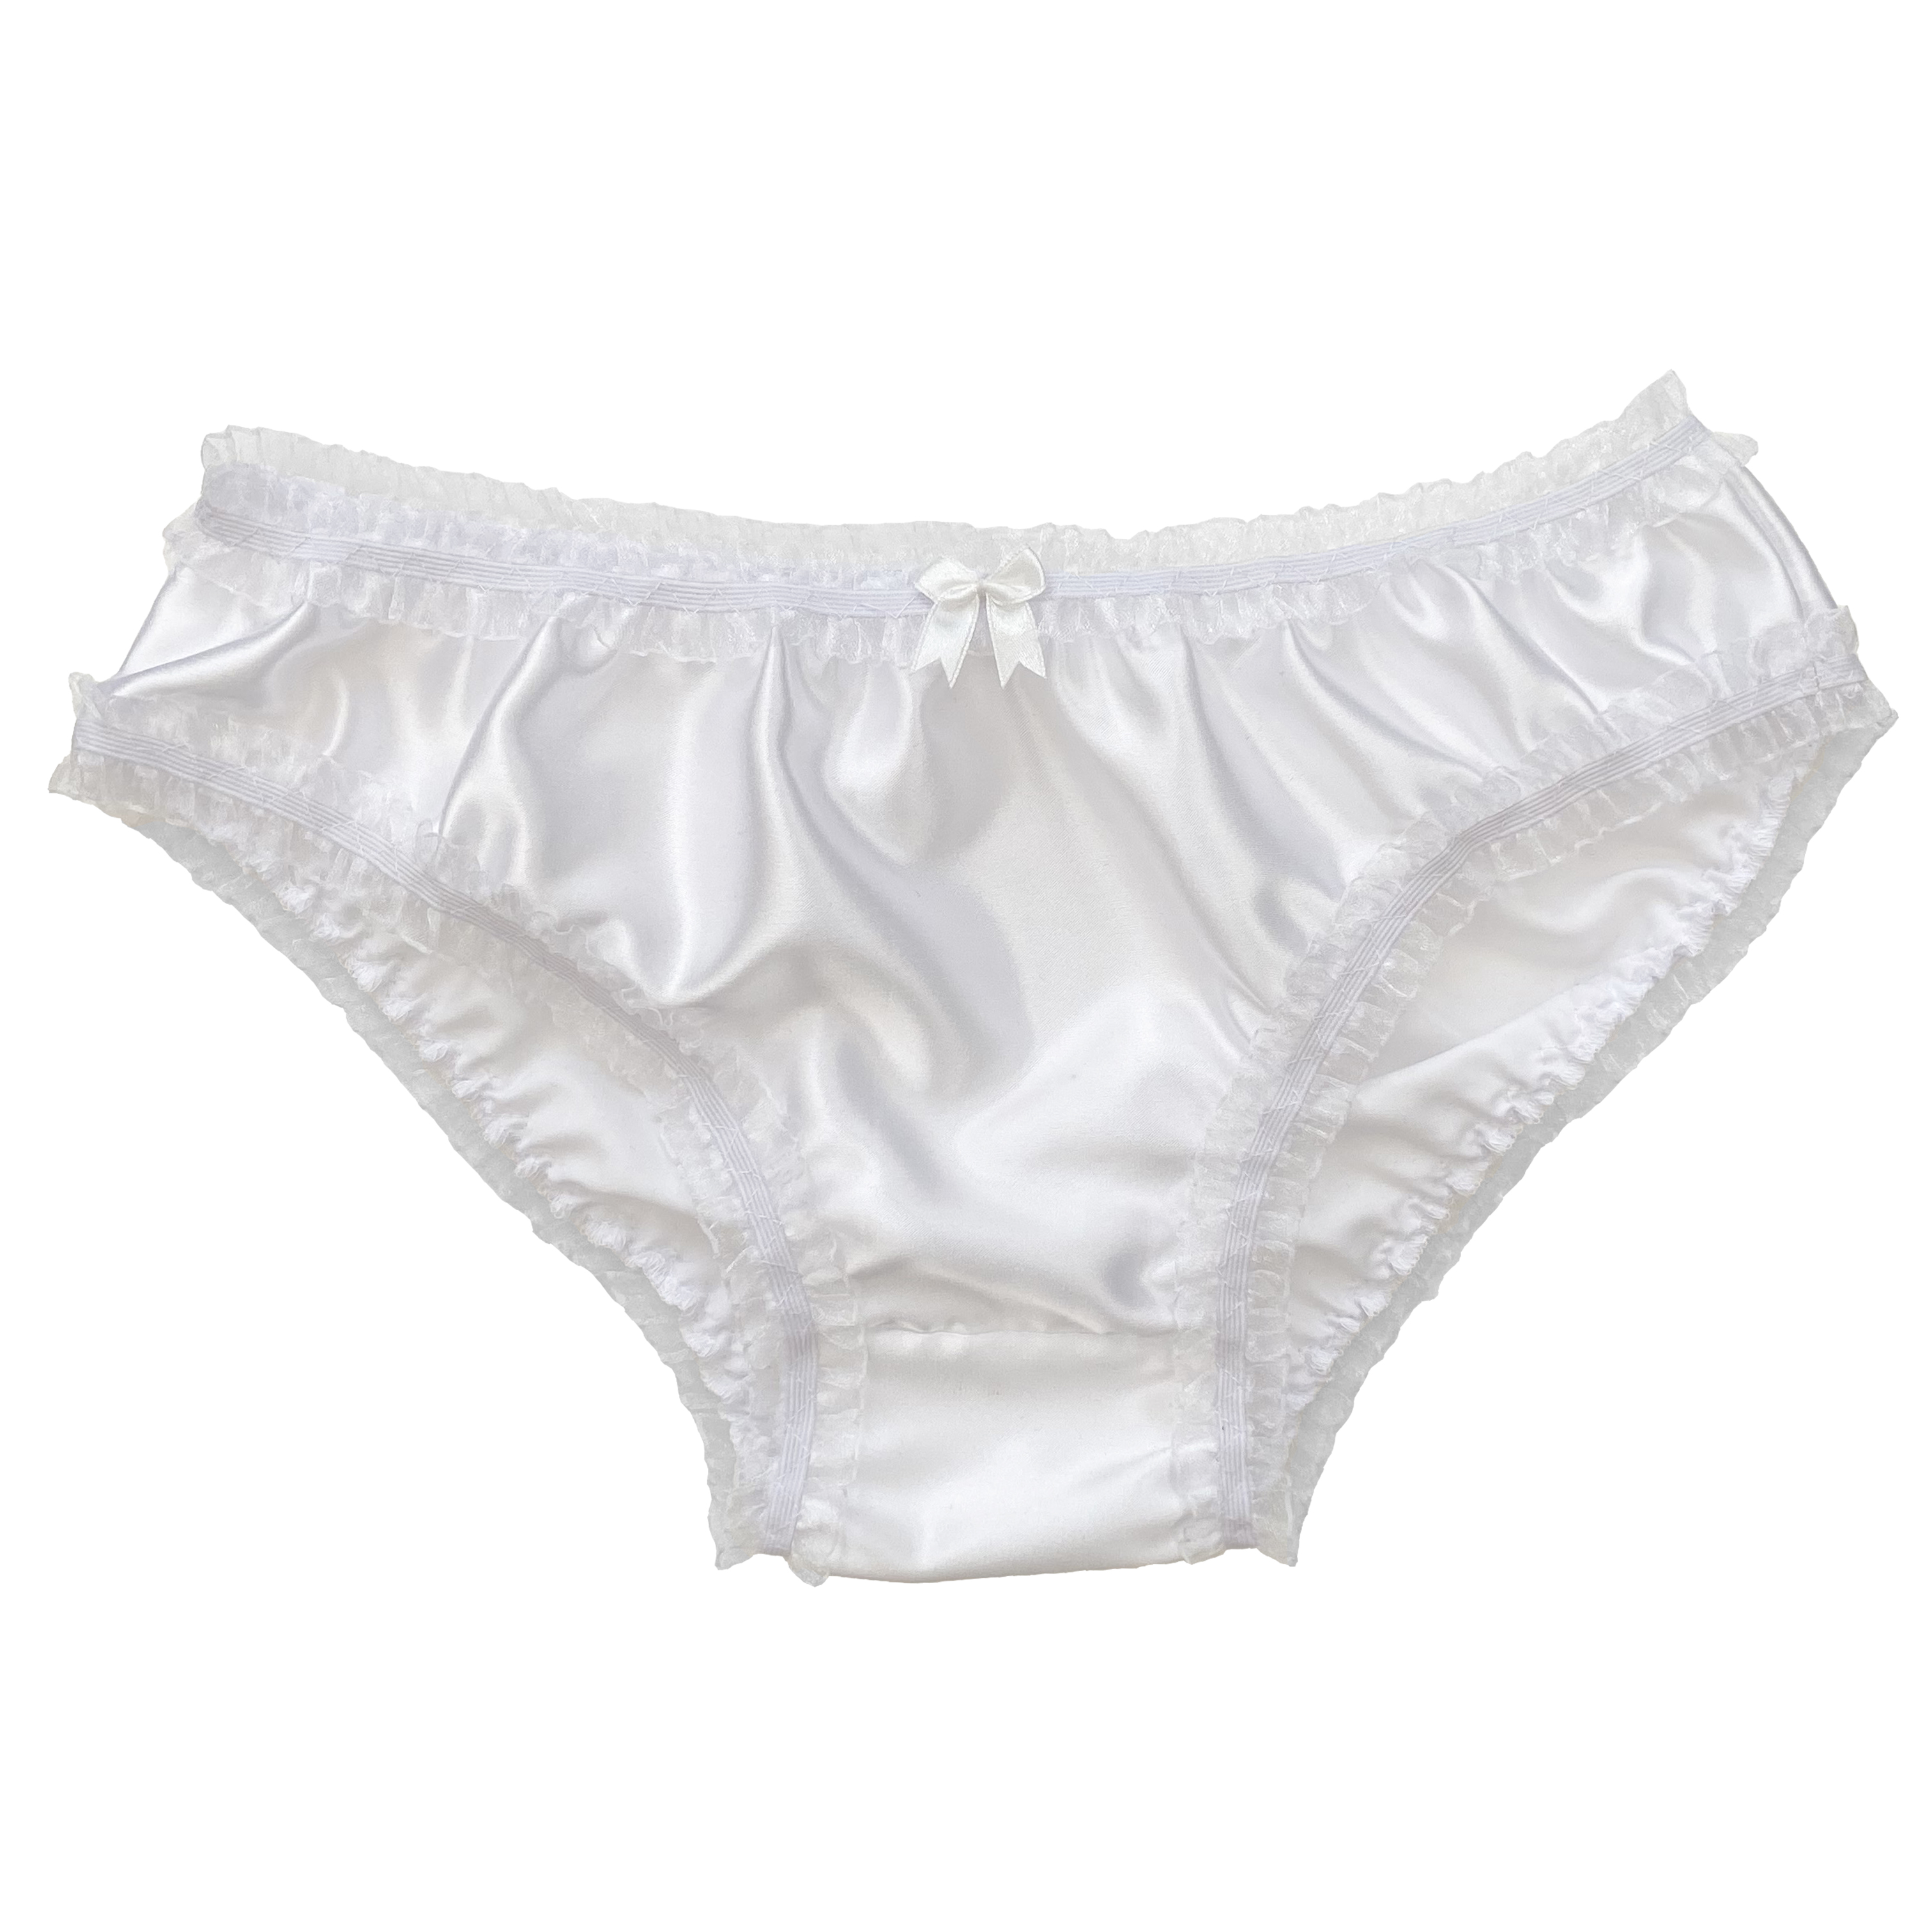 White Satin Lace Sissy Full Panties Bikini Knicker Underwear Size My